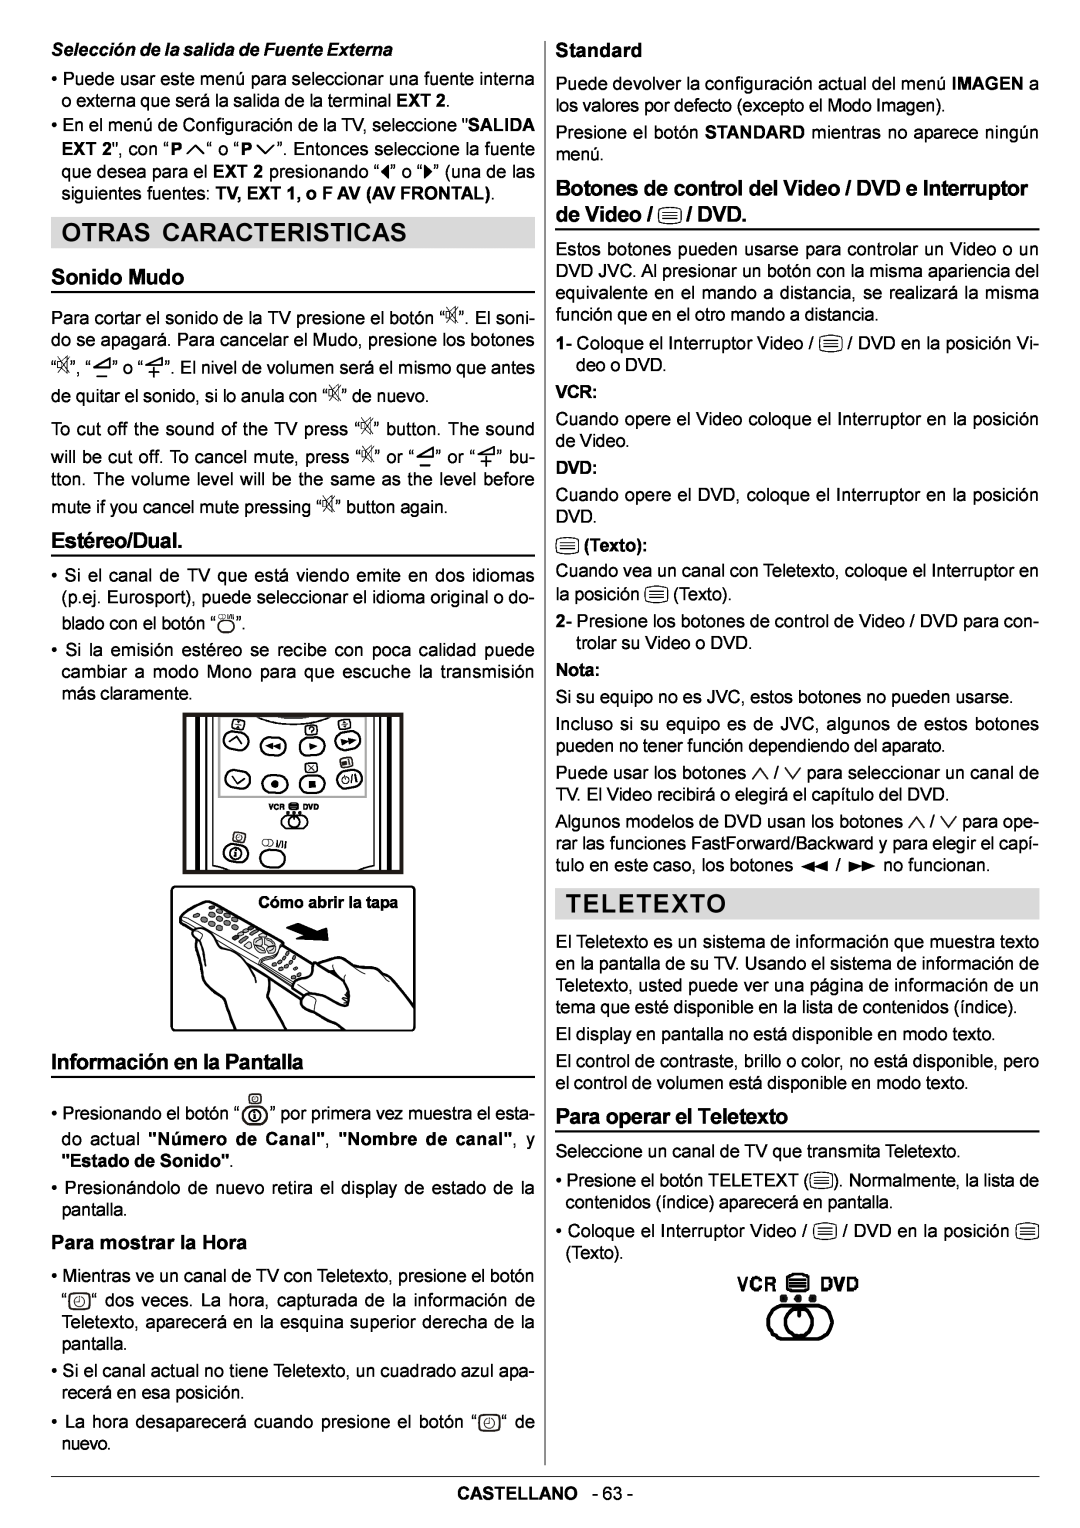 JVC AV29BF10EPS manual Otras Caracteristicas, Teletexto, Sonido Mudo, Estéreo/Dual, Información en la Pantalla 